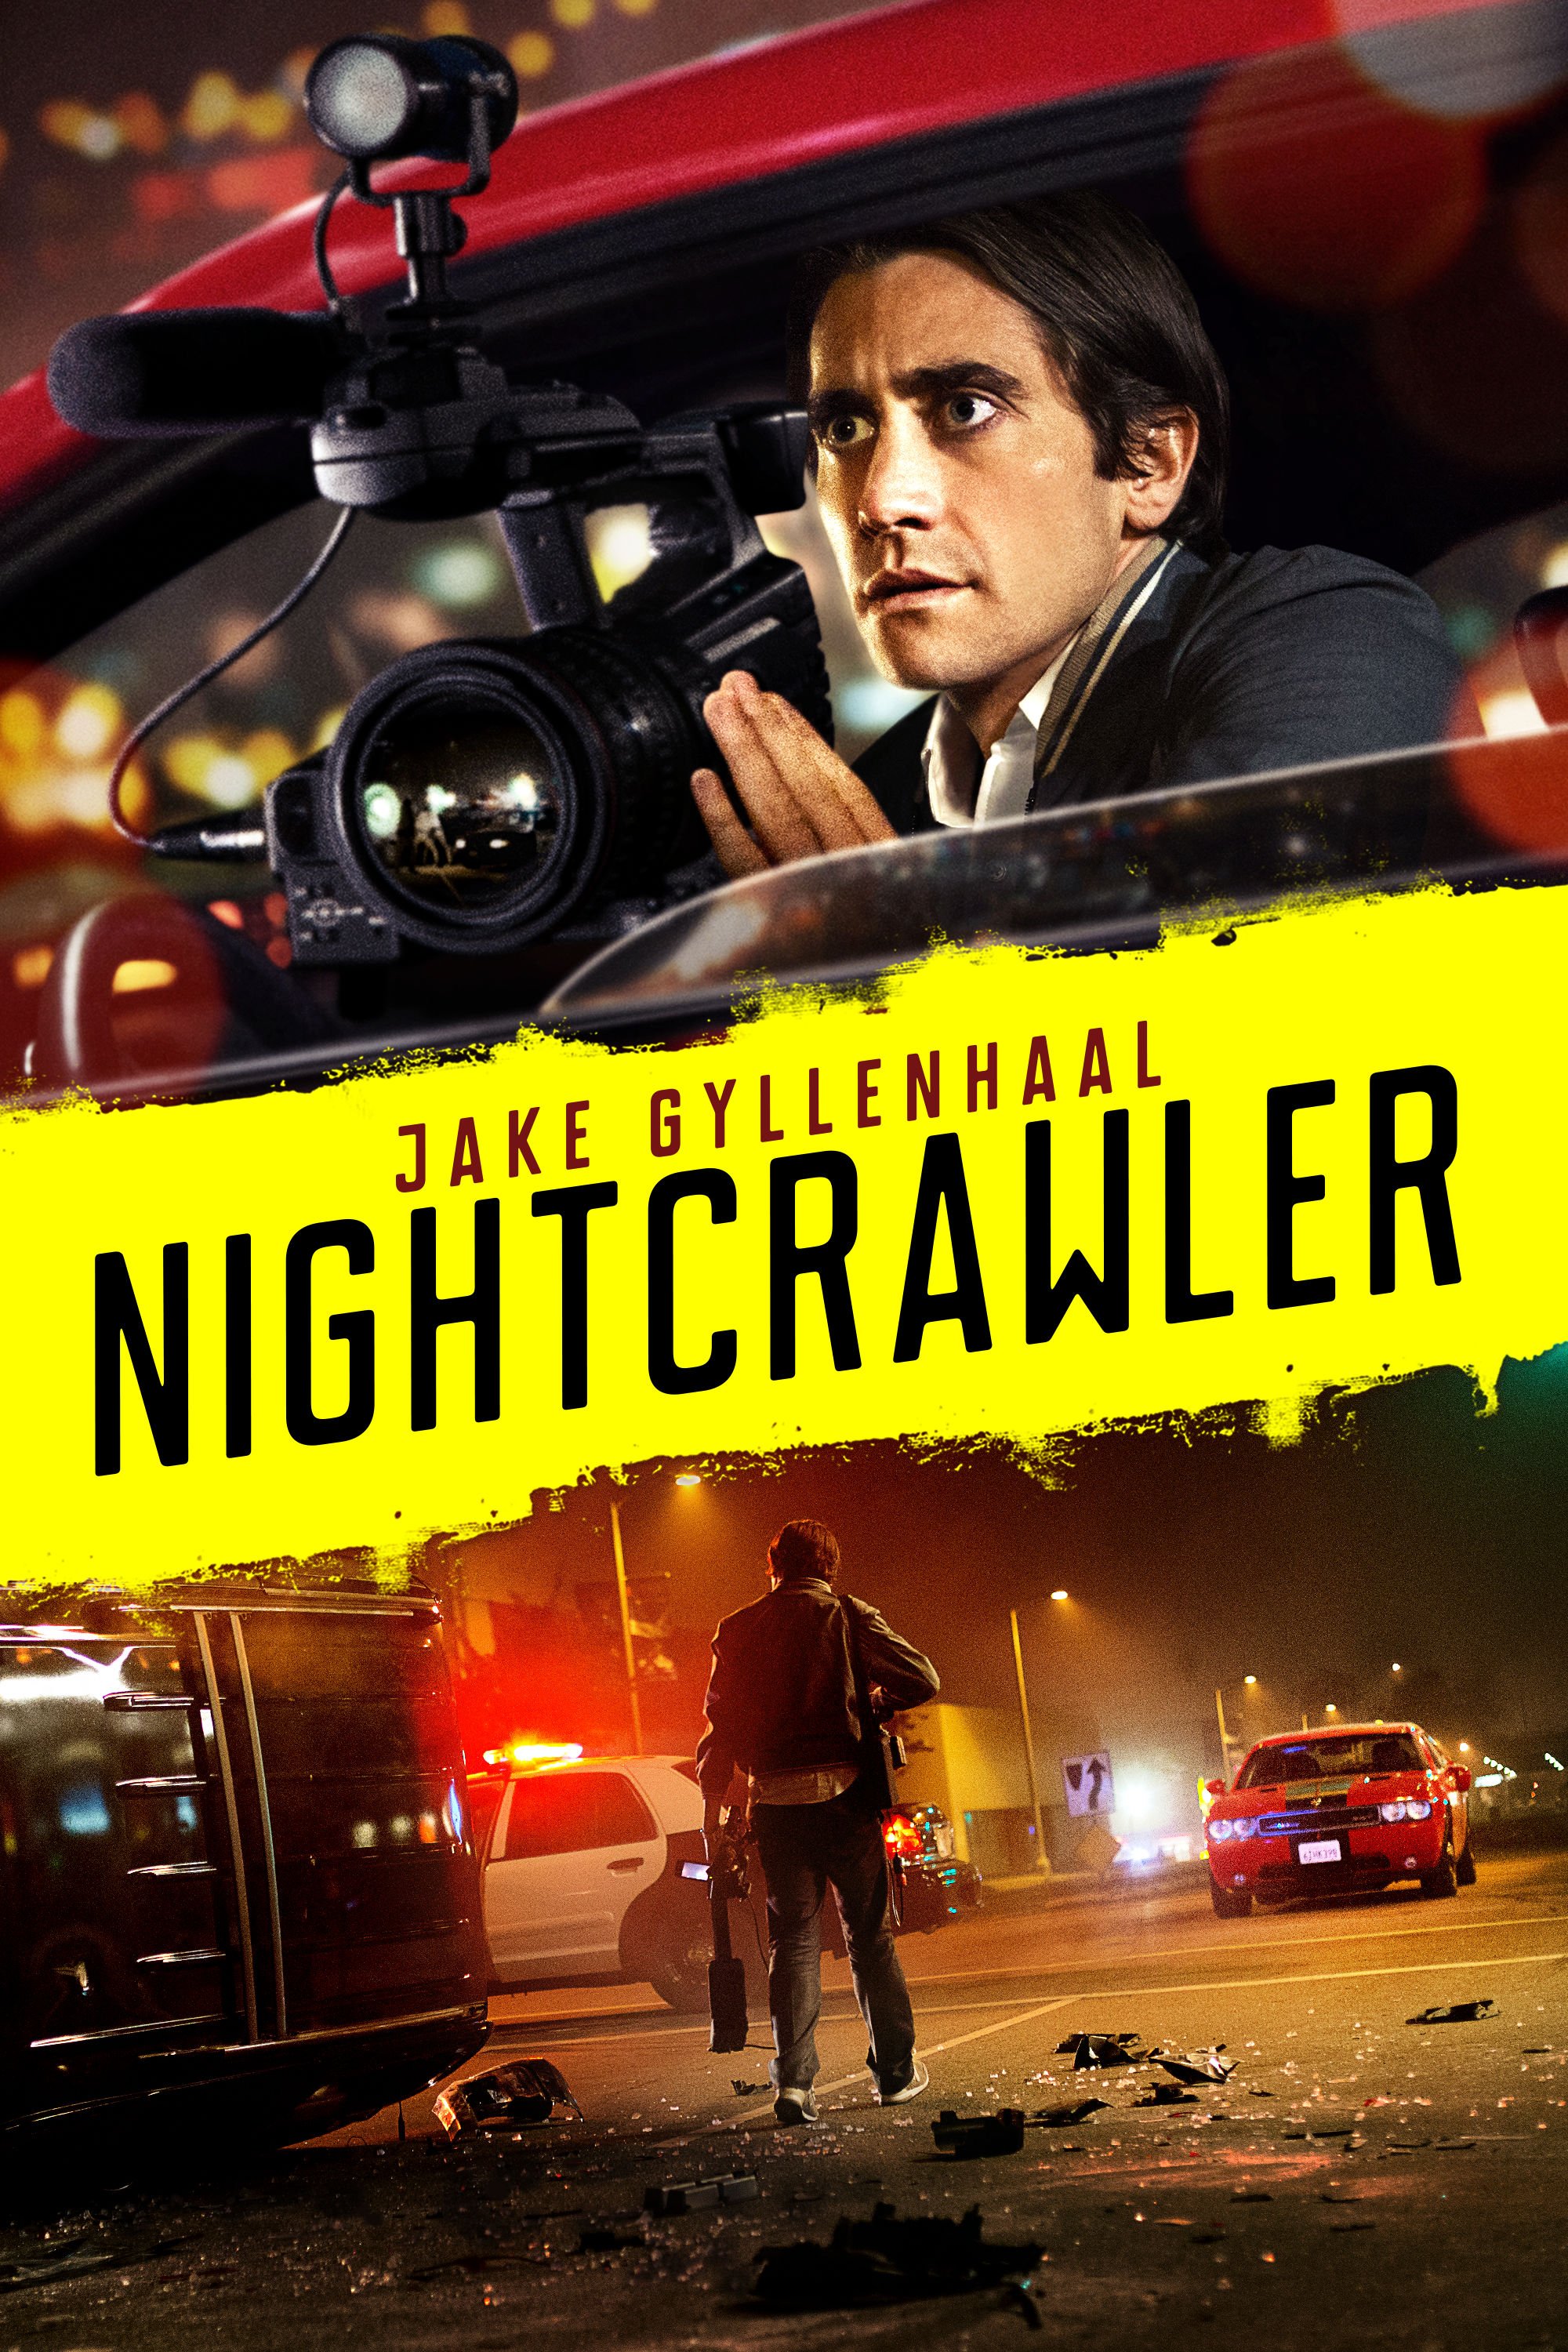 nightcrawler-filming-locations-itunes-dvd-poster